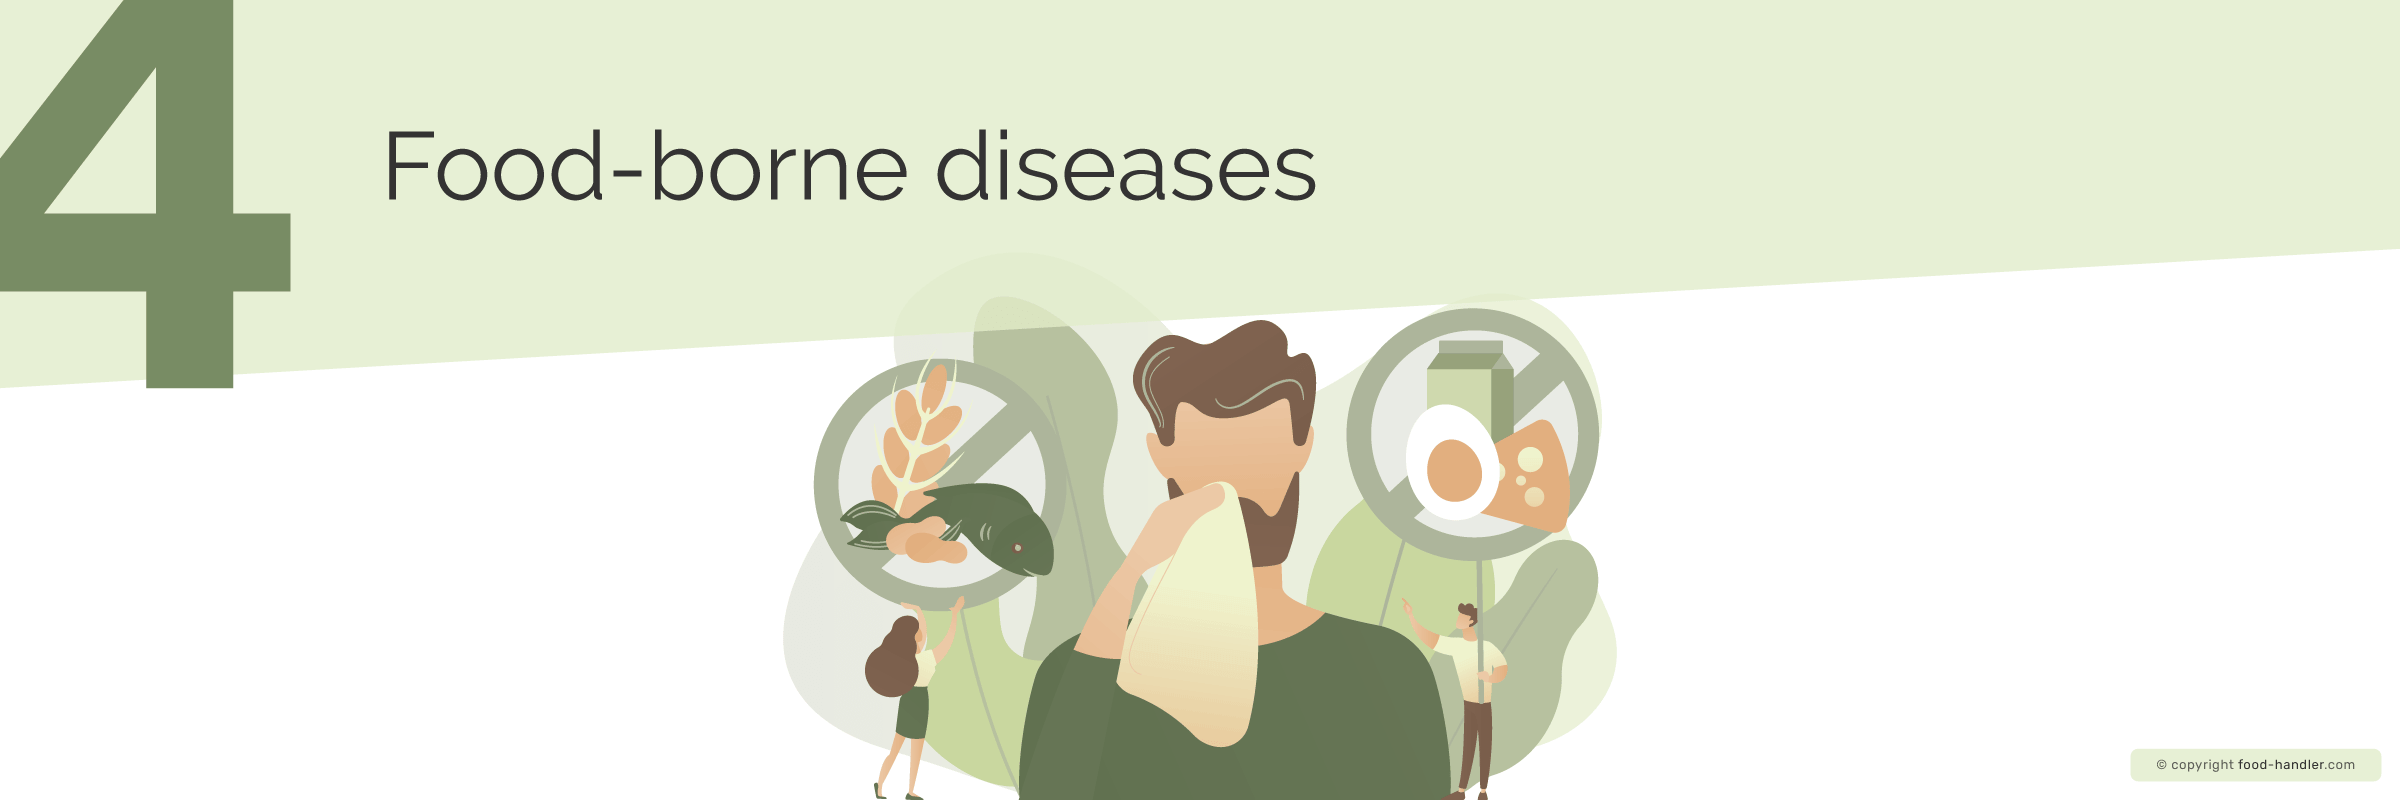 Food-borne diseases